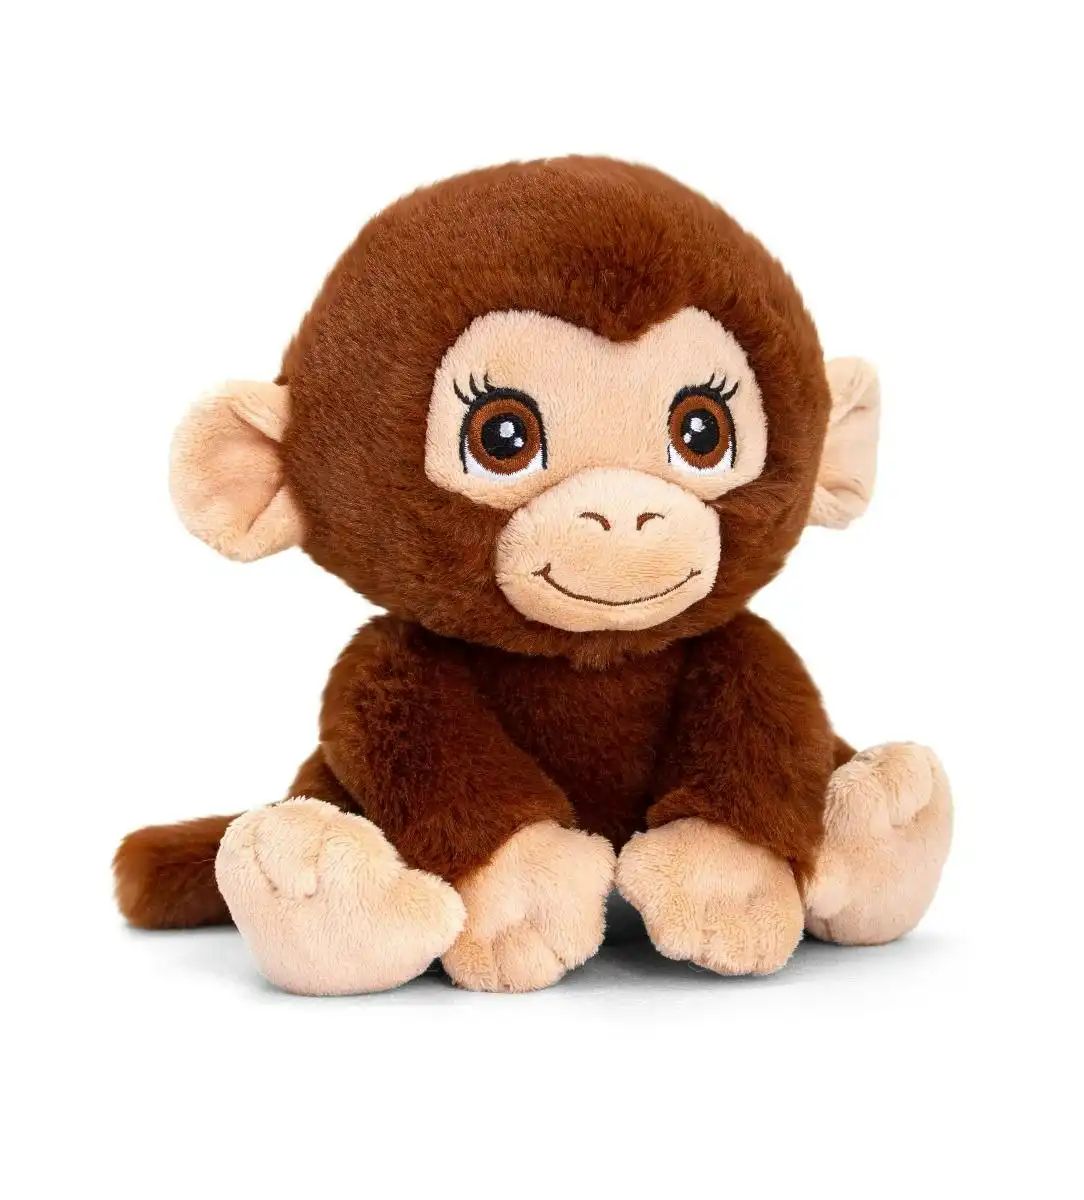 Adoptable World - Plush Monkey by Keeleco 16cm